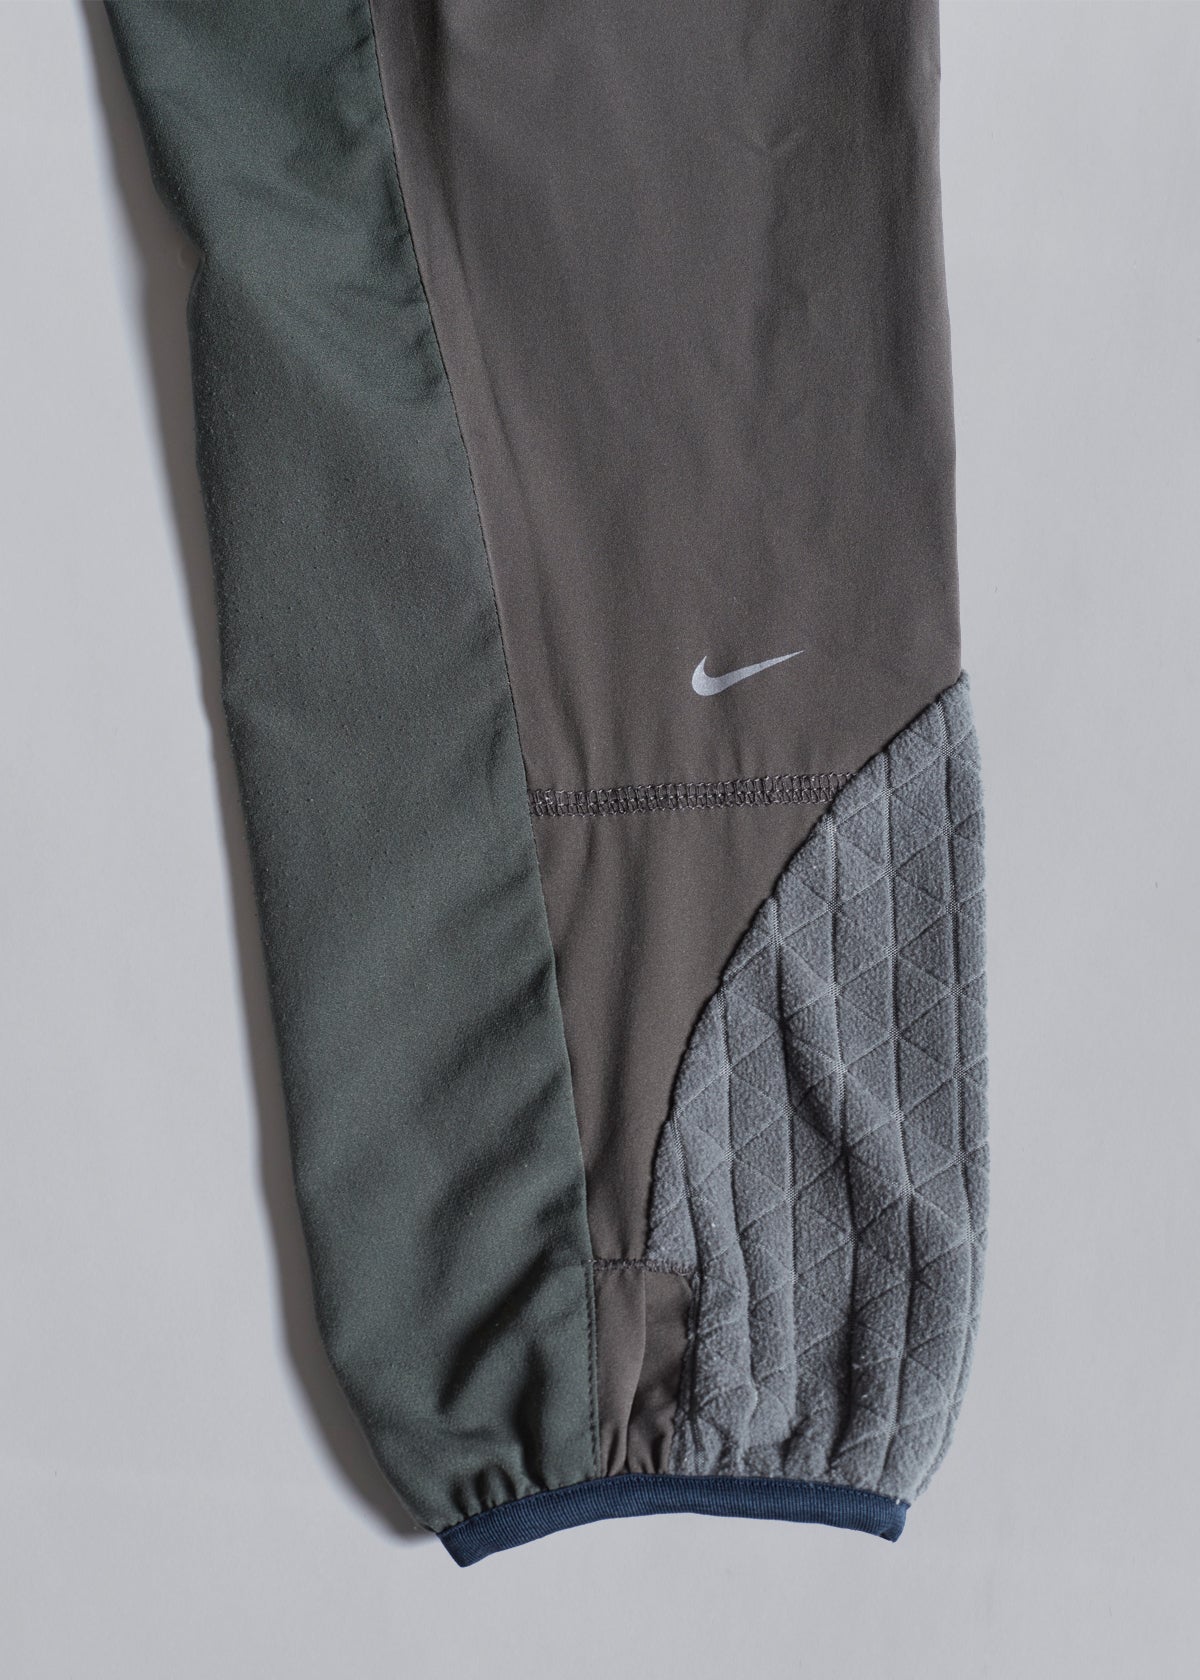 Nike/Undercover Gyakusou Running Jacket SS2010 - X-Large - The Archivist Store